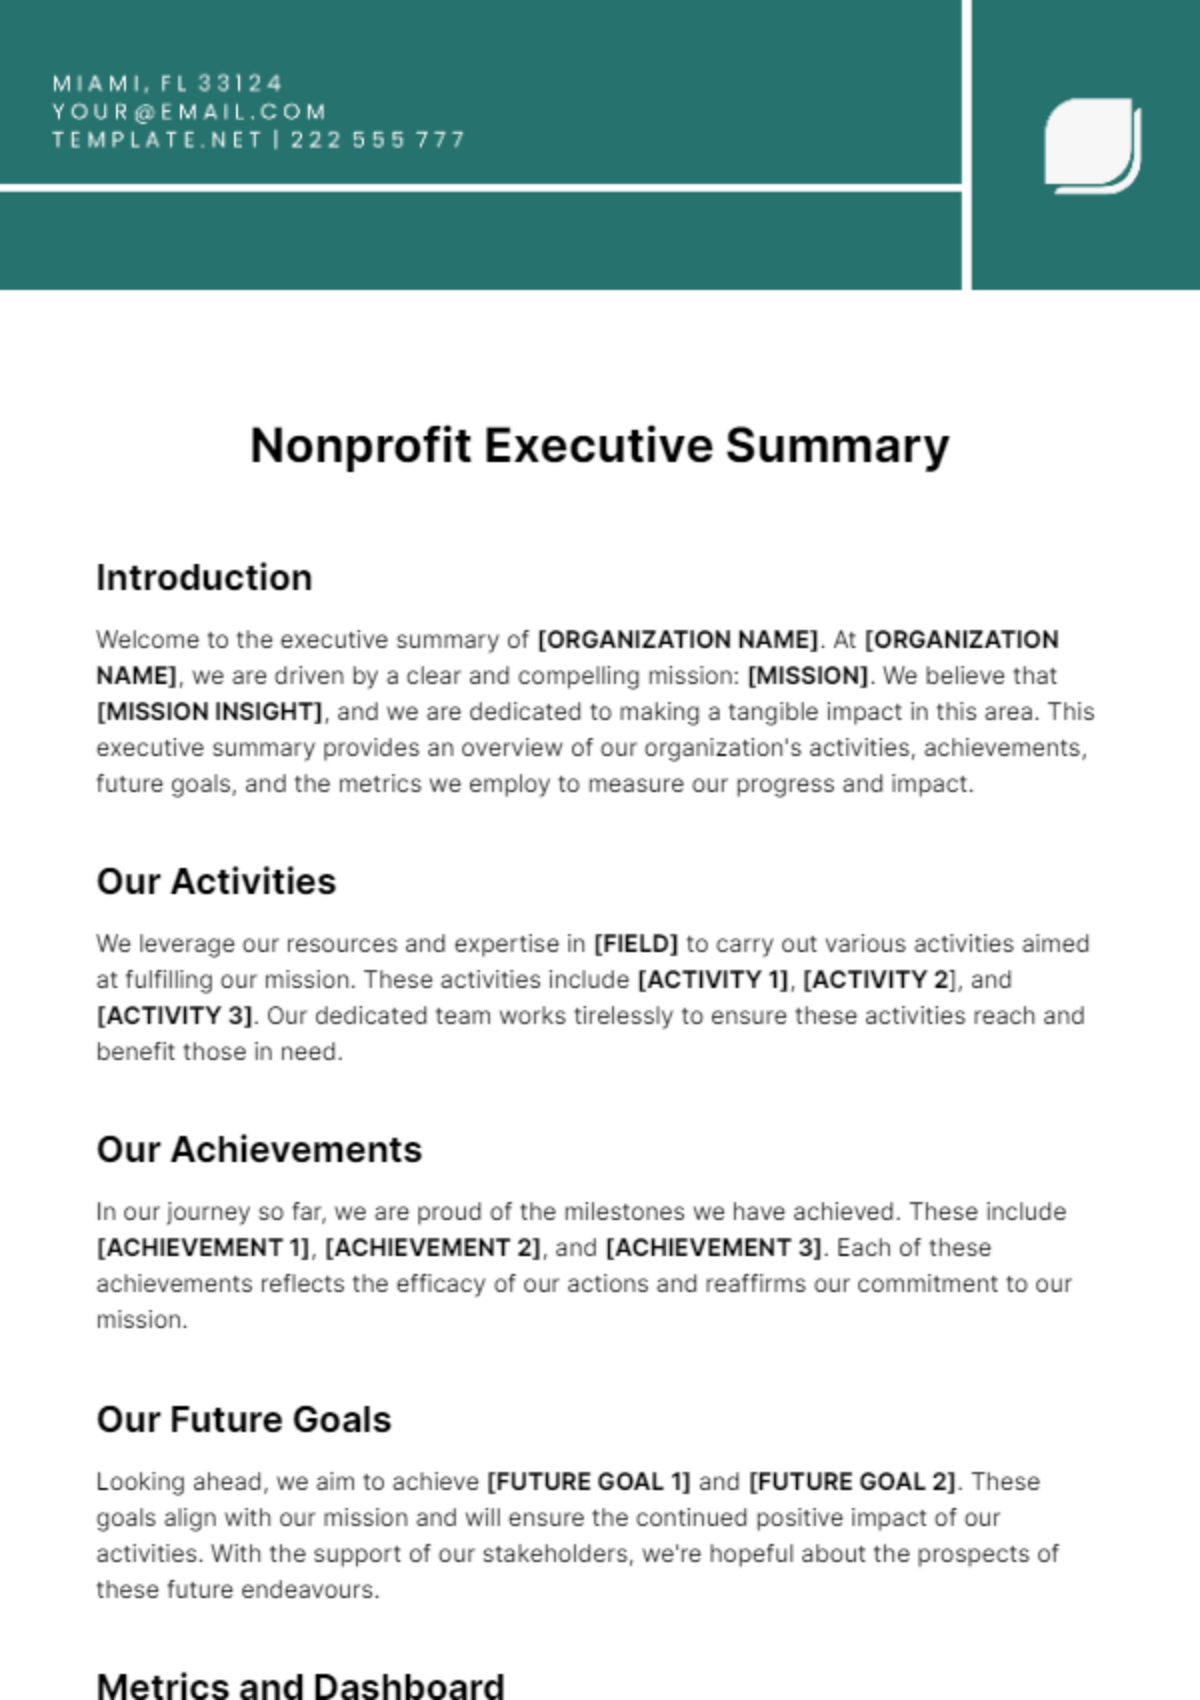 Nonprofit Executive Summary Template